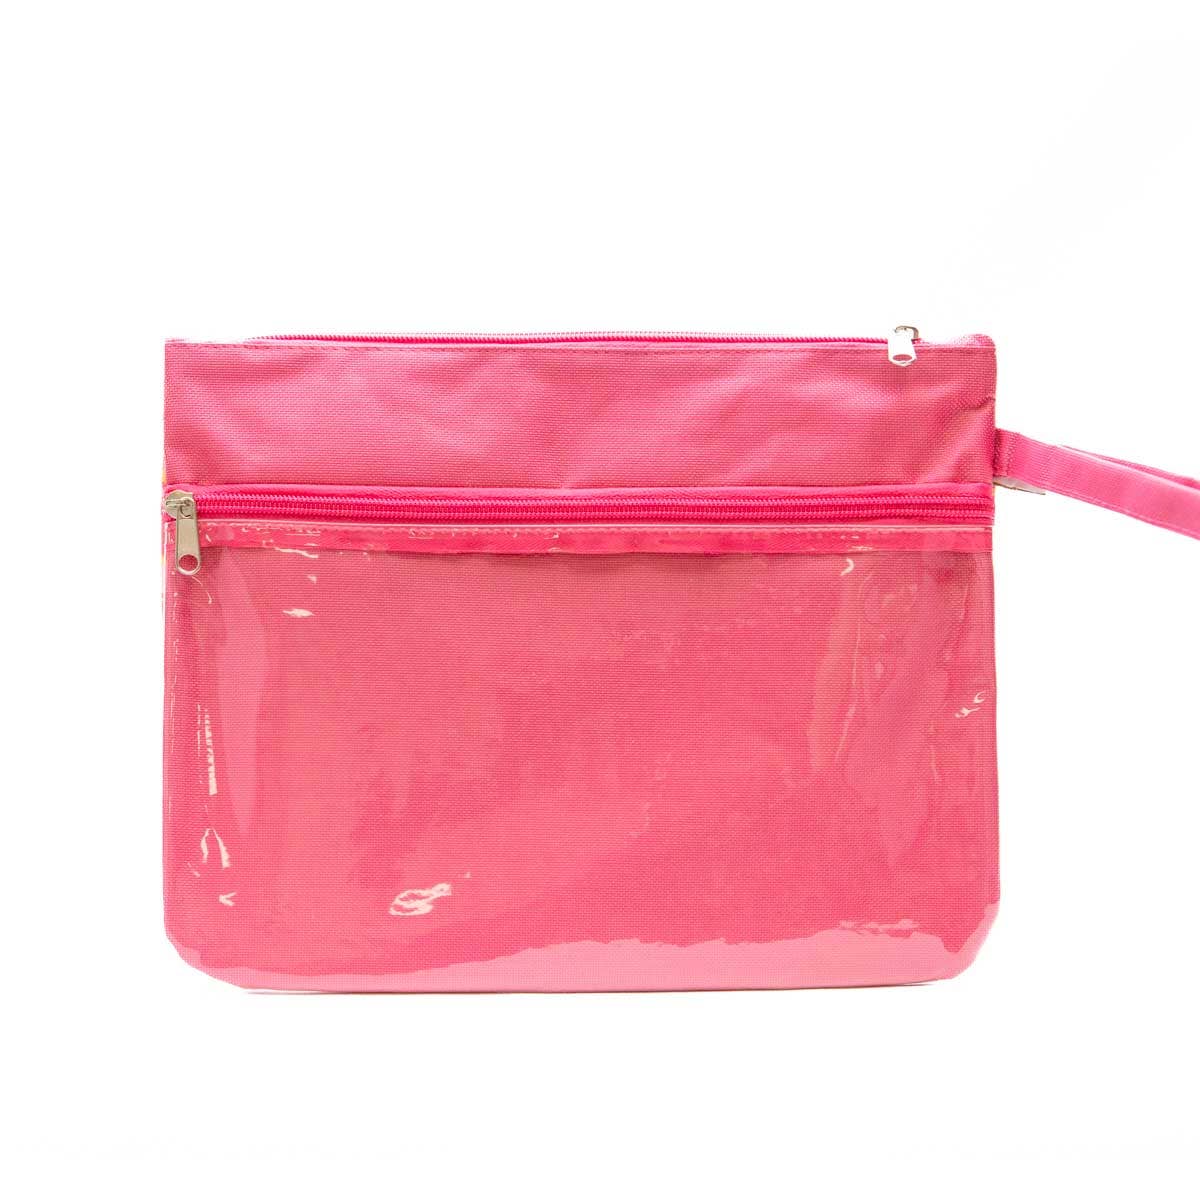 Royal Standard Stella Marina Wet/Dry Bag - Pink/Sunburst   